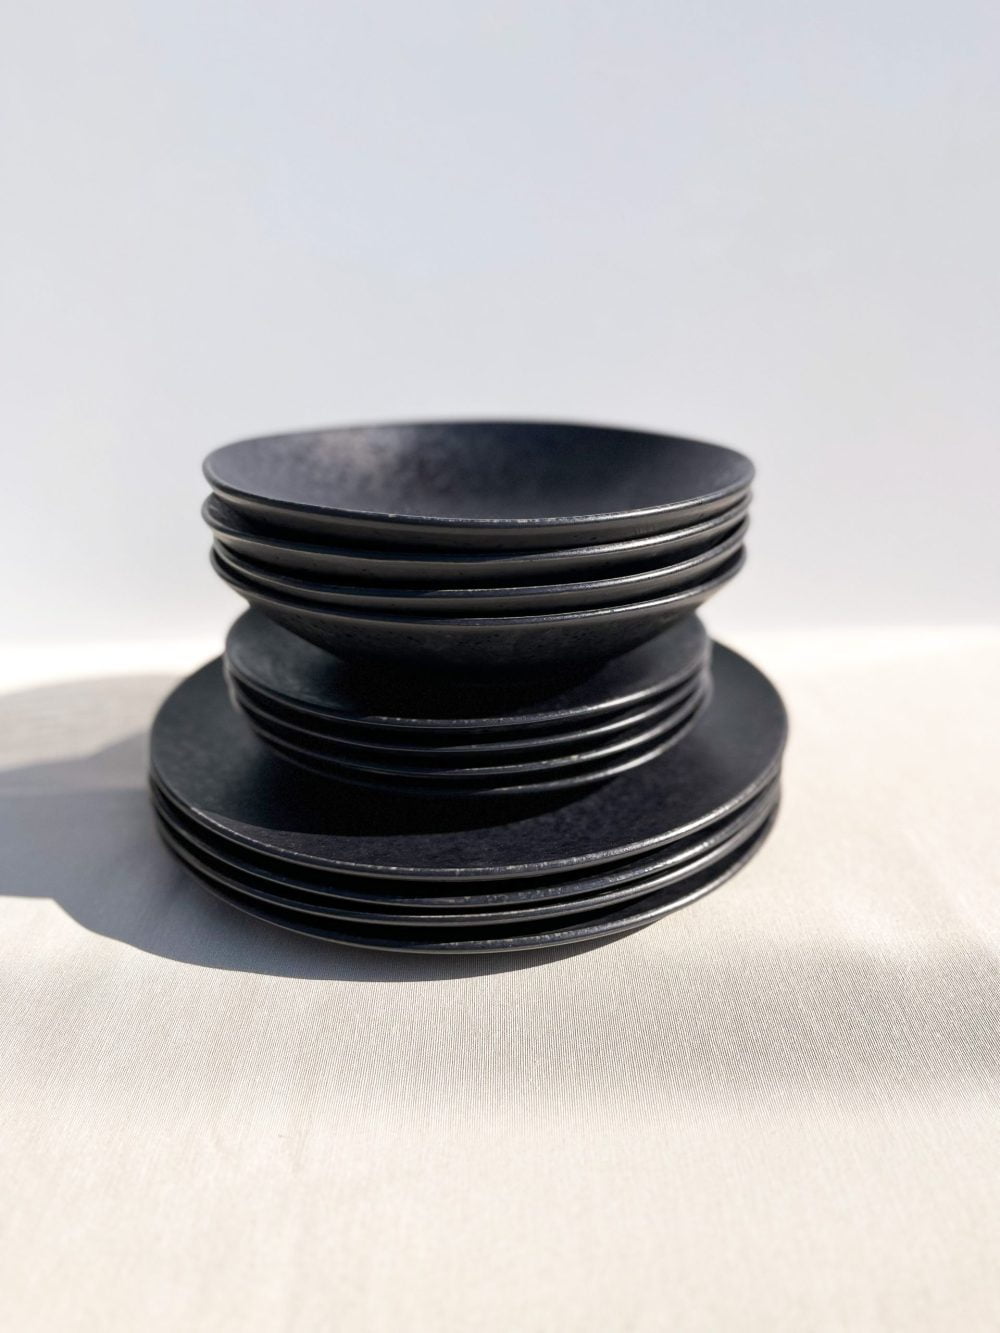 zwarte servies set pastaborden - black stone -handgemaakt keramiek - modern portugees servies bij UNRO